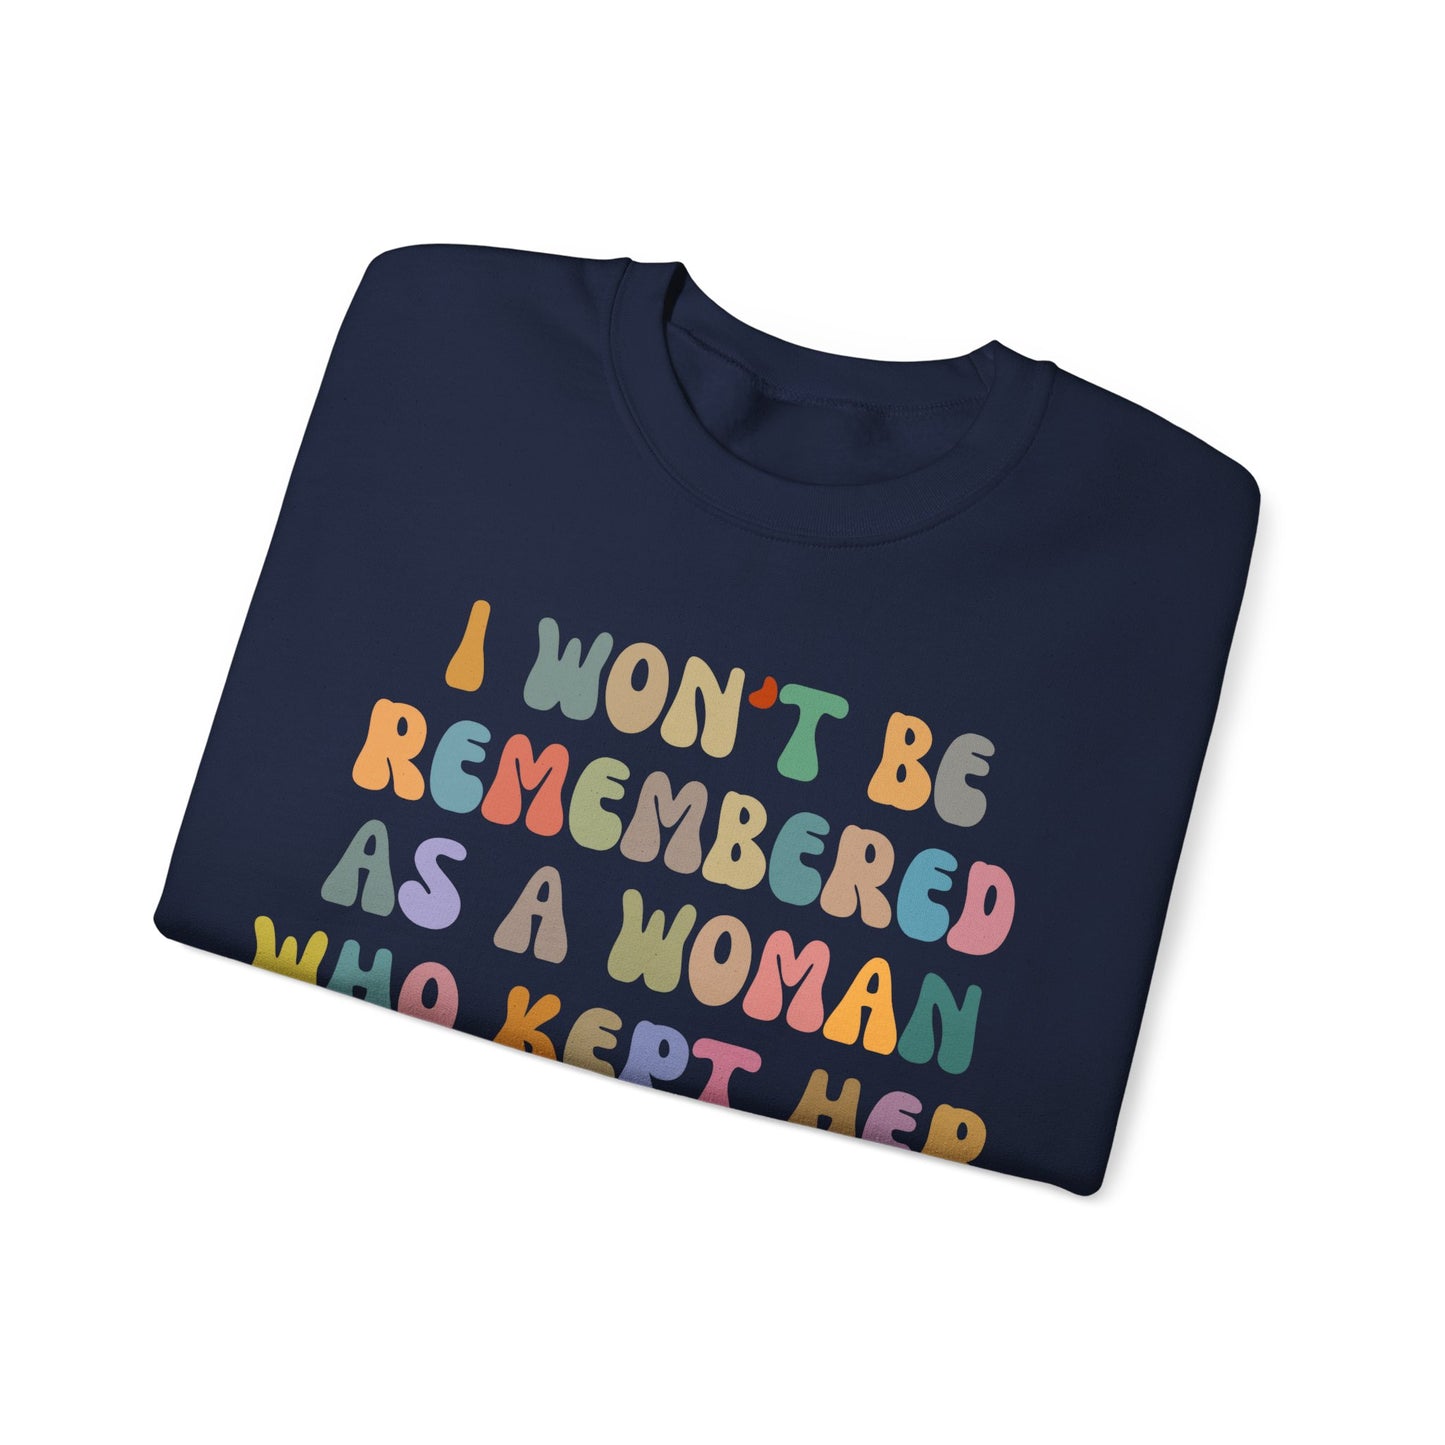 I Won't Be Remembered As A Woman Who Kept Her Mouth Shut Sweatshirt, Women Rights Equality, Women's Power Sweatshirt, S1088